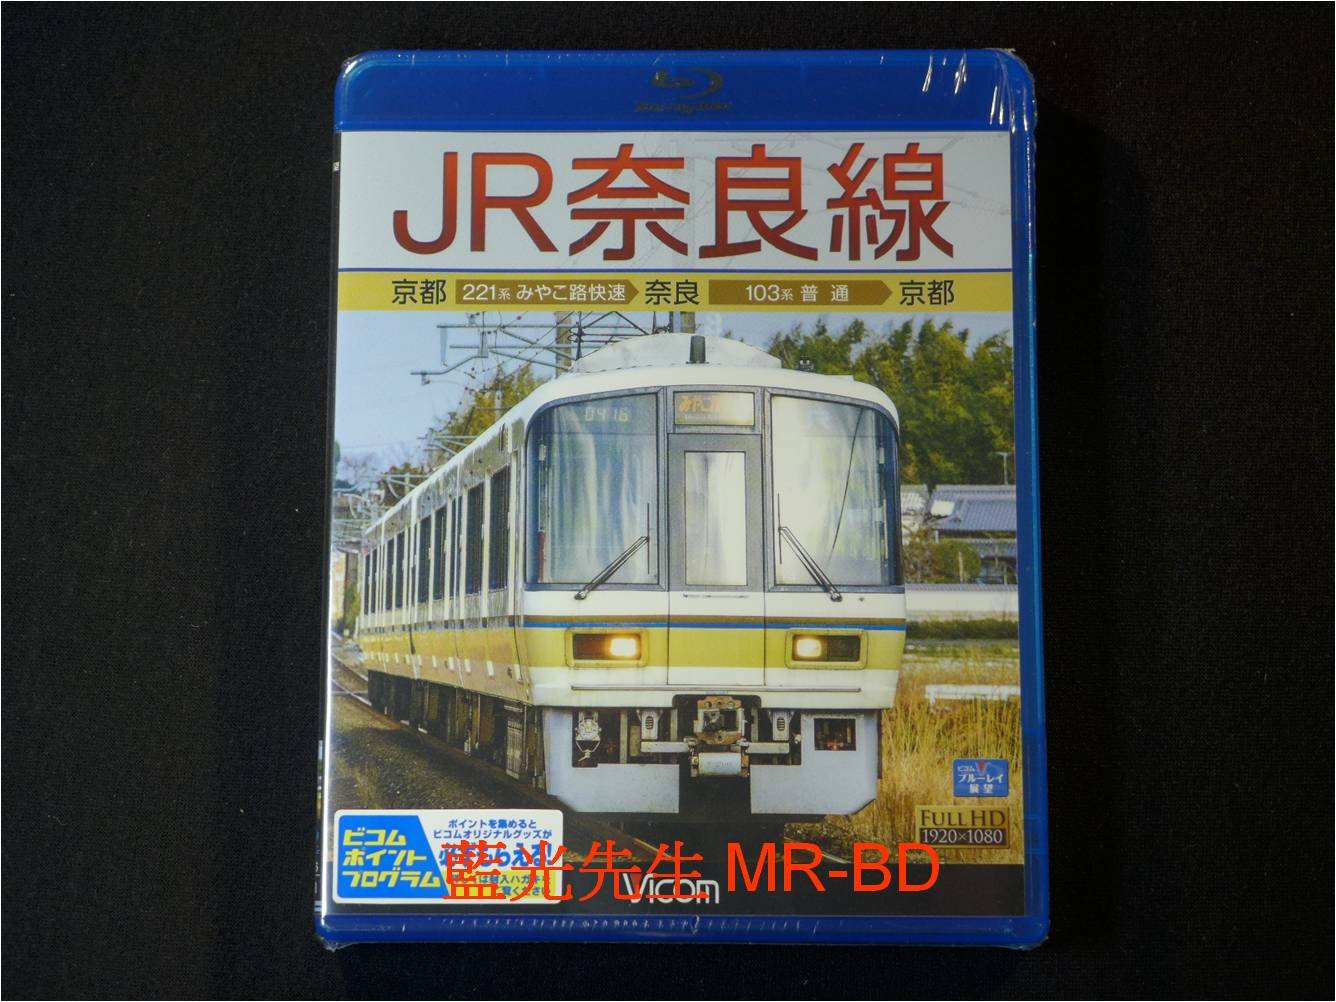 JR奈良線 京都~奈良~京都 (Blu-ray Disc) 9jupf8b-